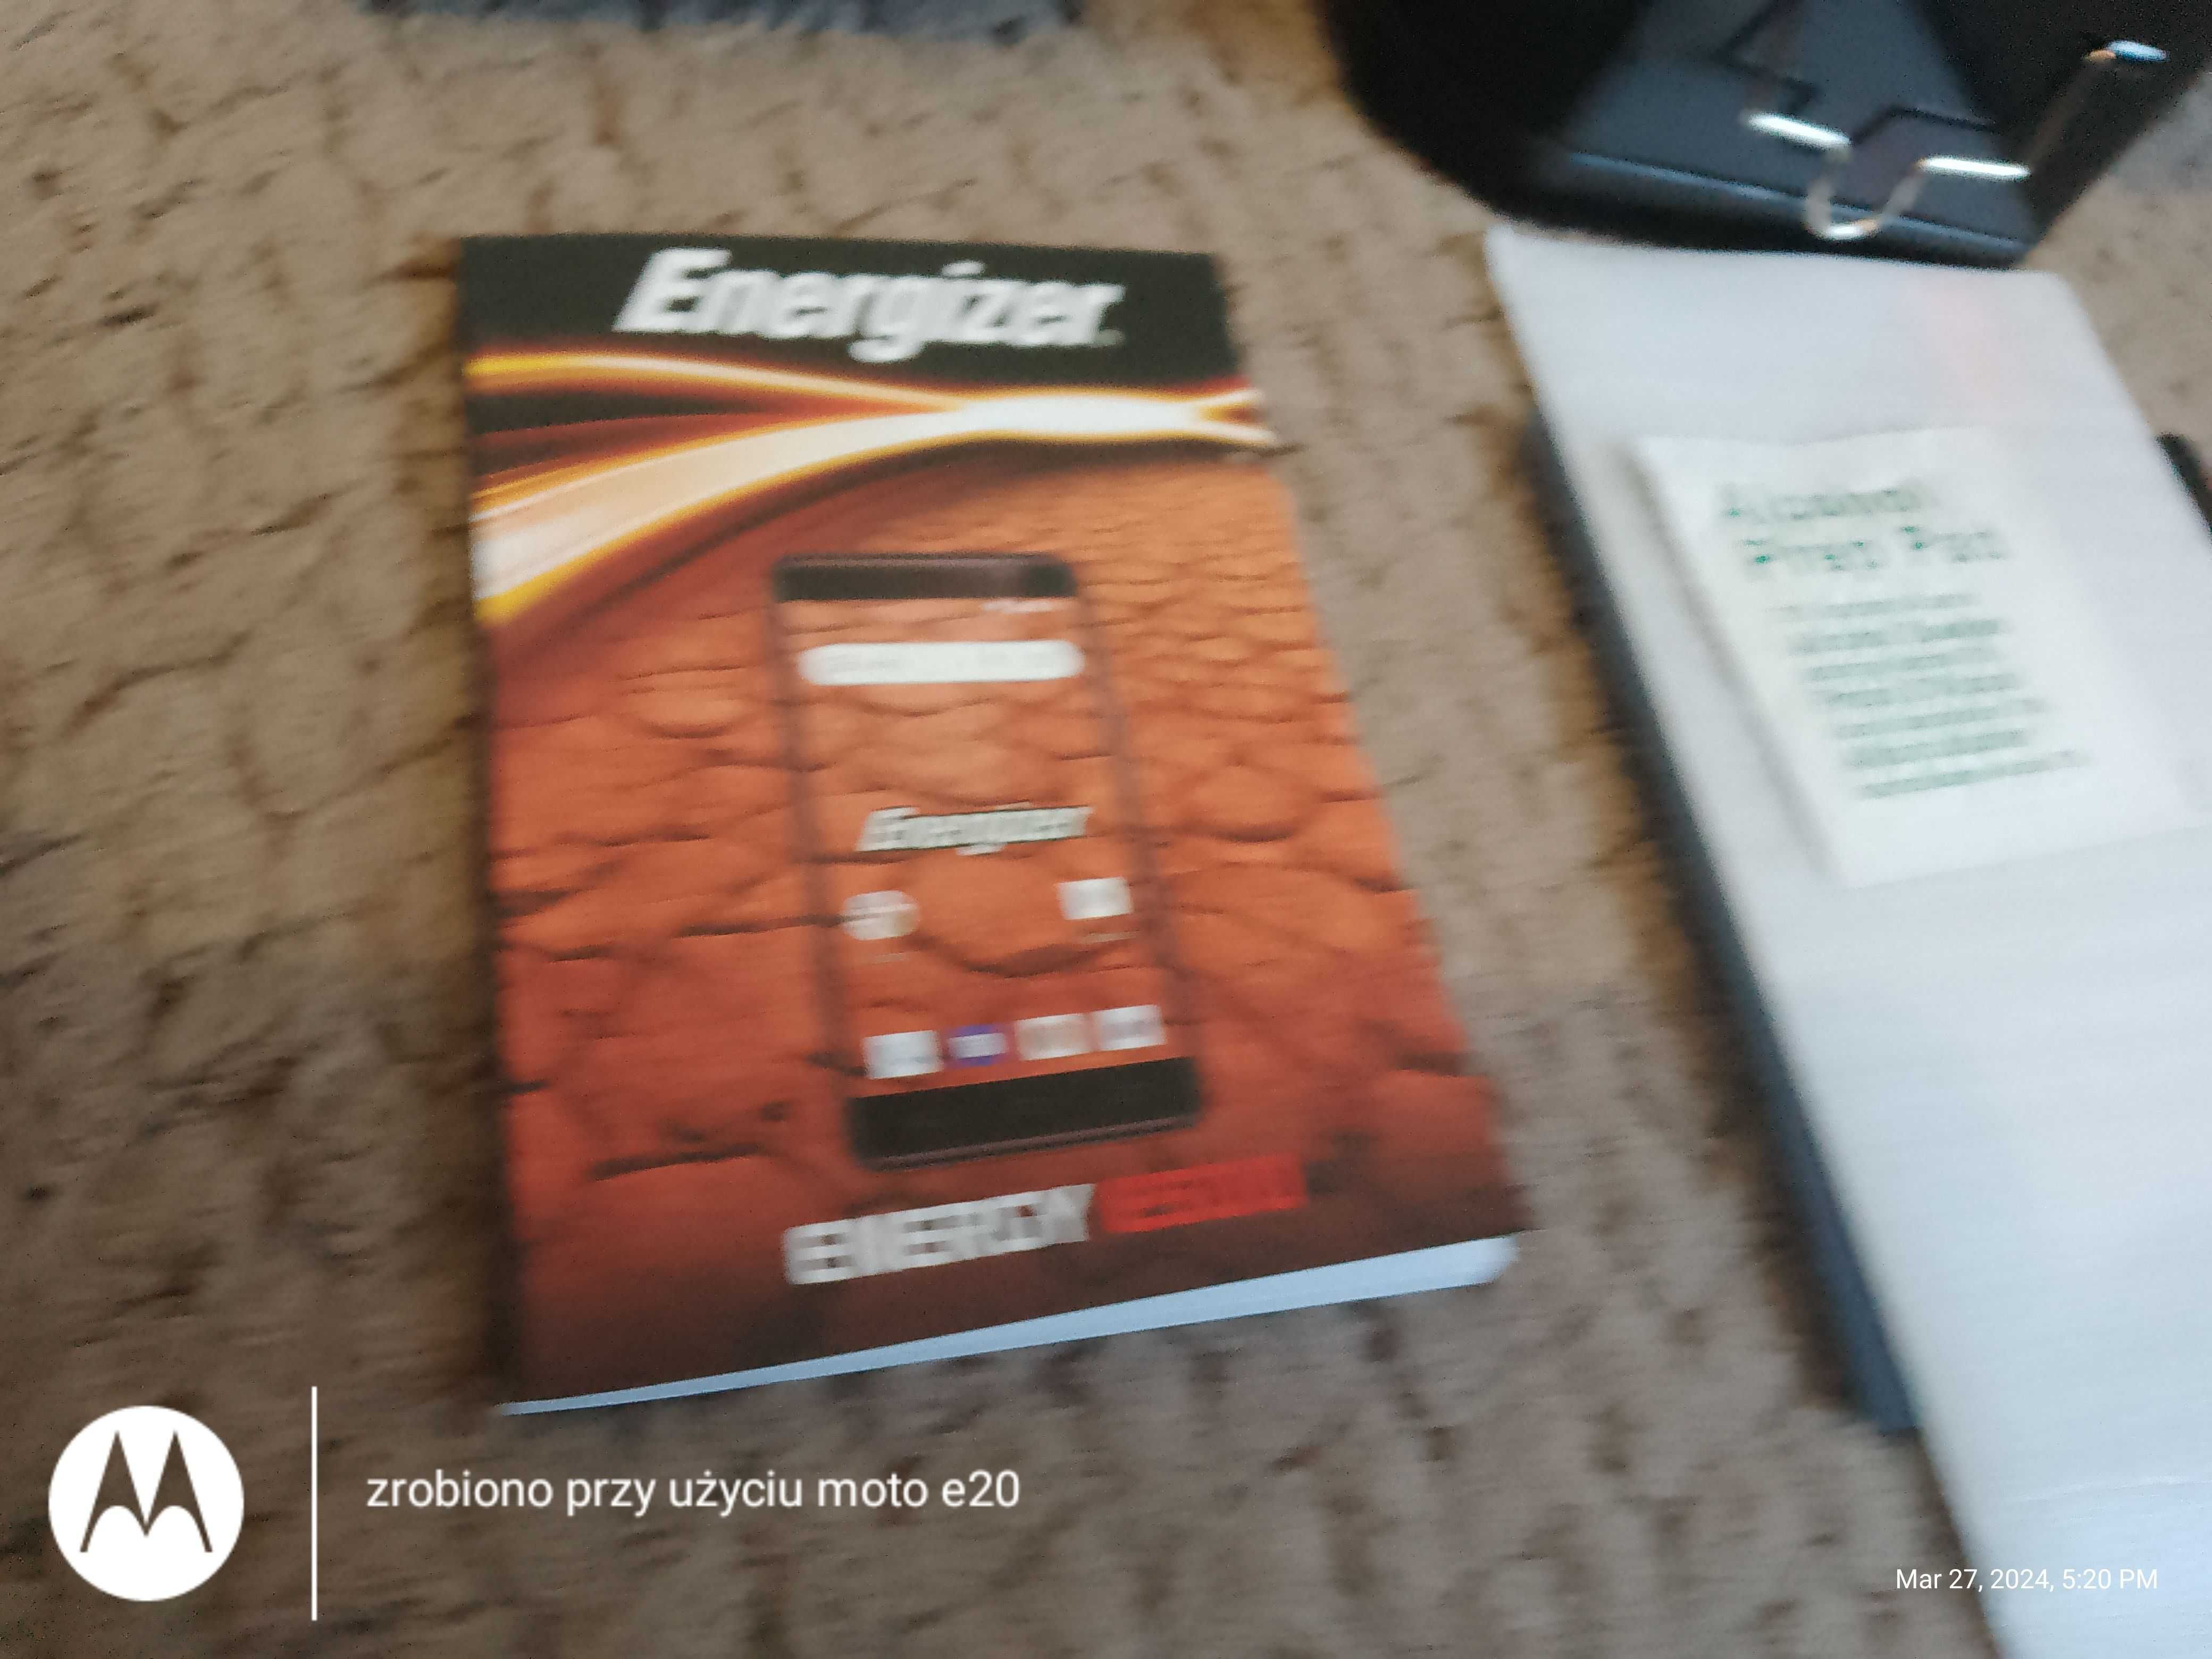 Energizer Energy E500 8GB dual Si.+Gratis karta Sim orange free nowa